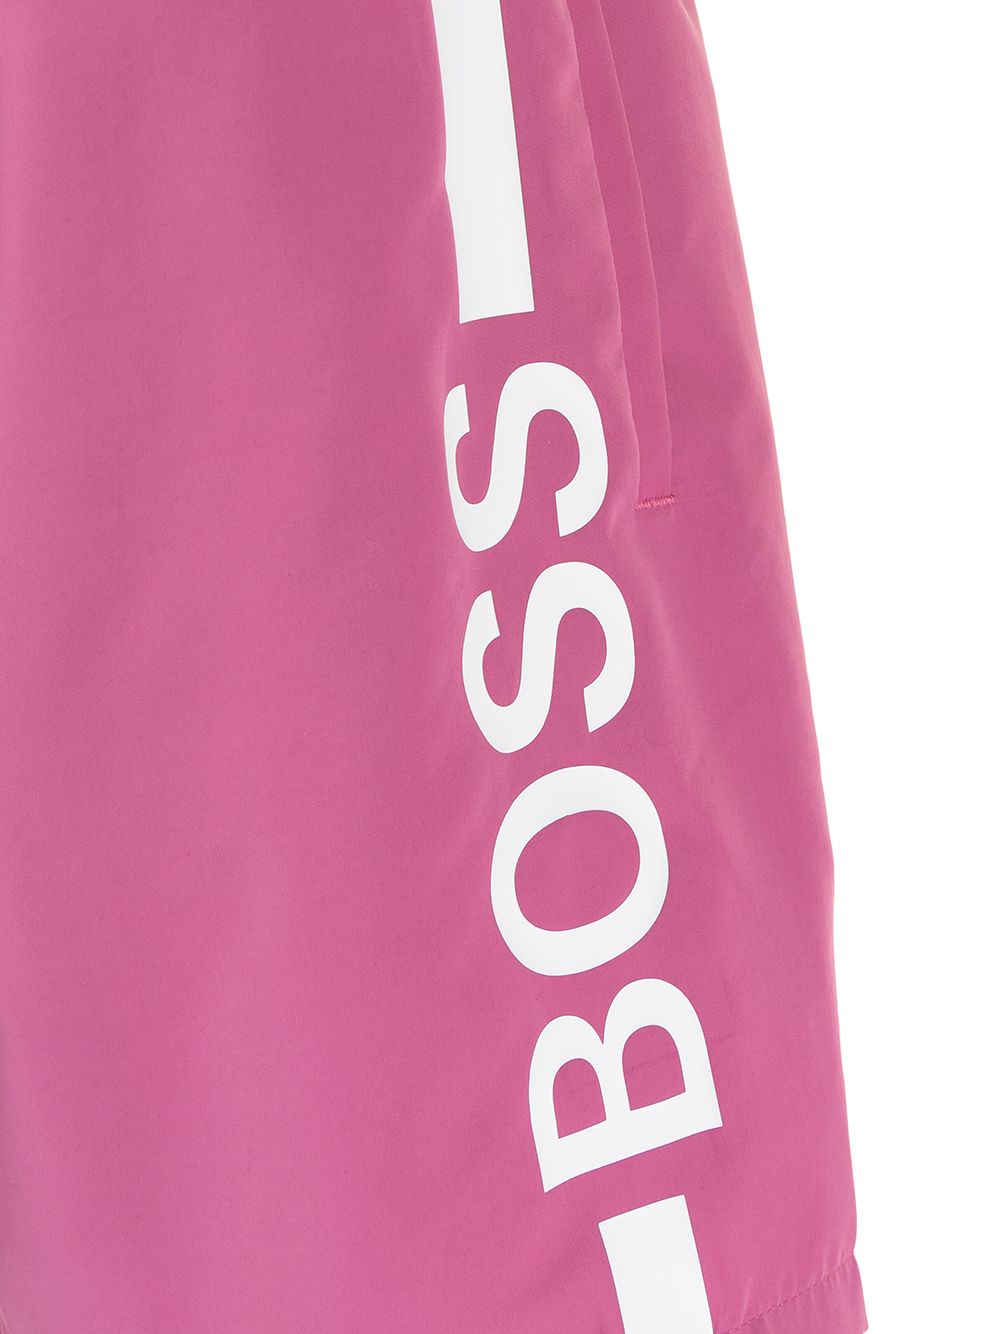 BOSS Logo Swim Shorts Pink - MAISONDEFASHION.COM